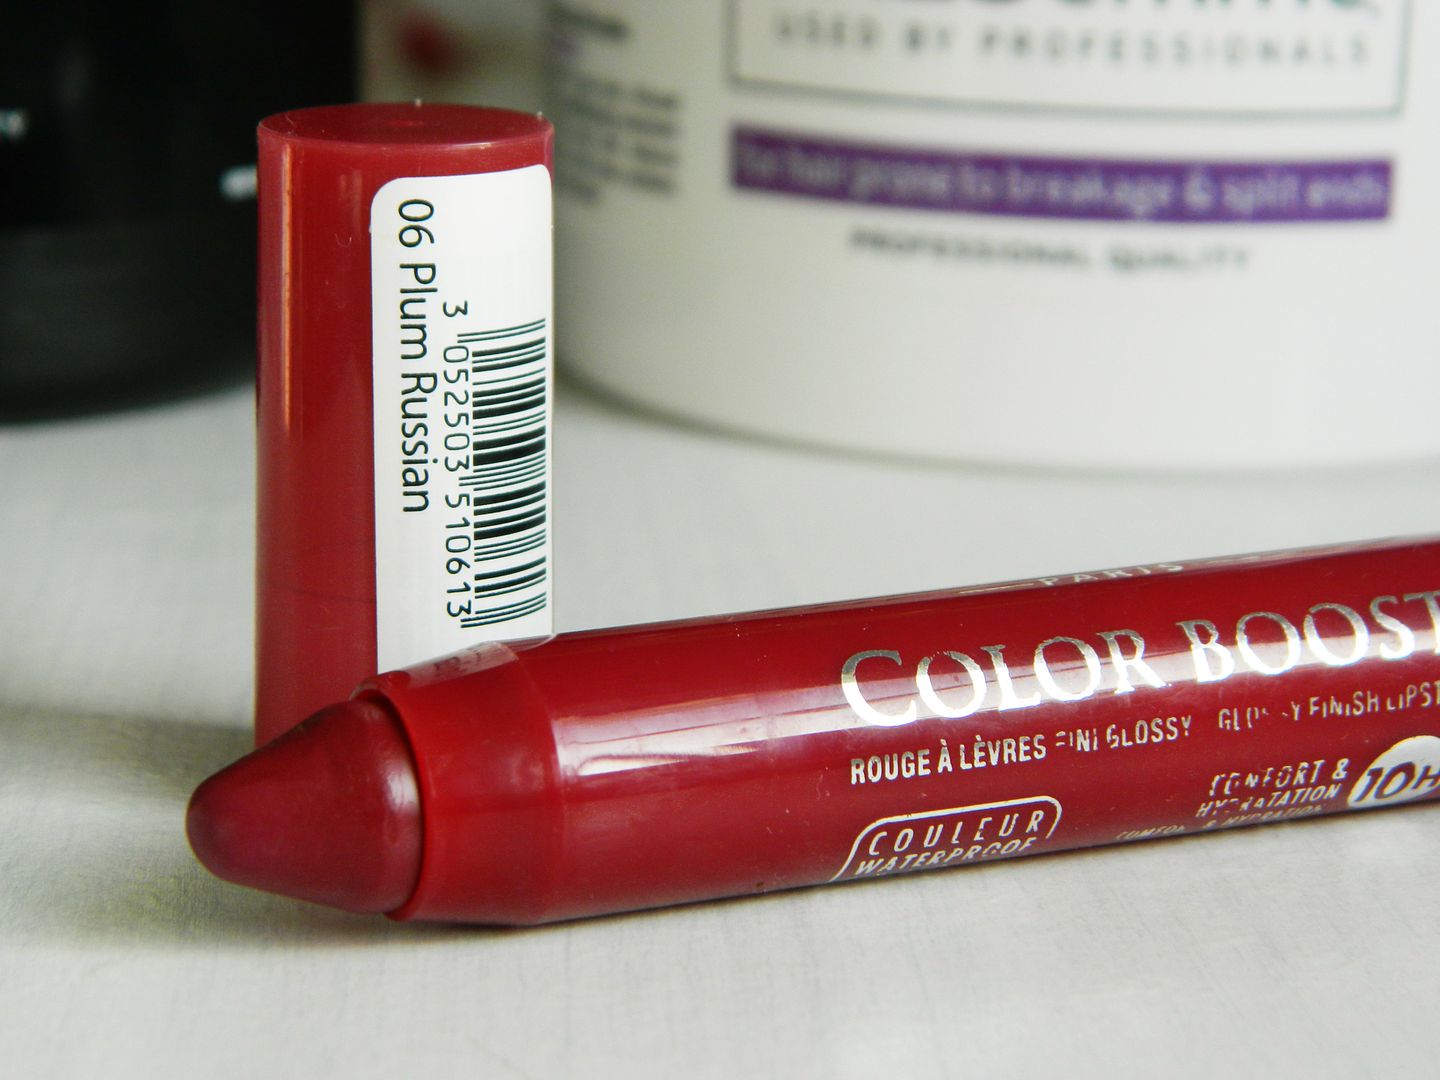 November 2013 Favourite's Bourjois Color Boost Lip Crayon Plum Russian Belle-amie UK Beauty Fashion Lifestyle Blog